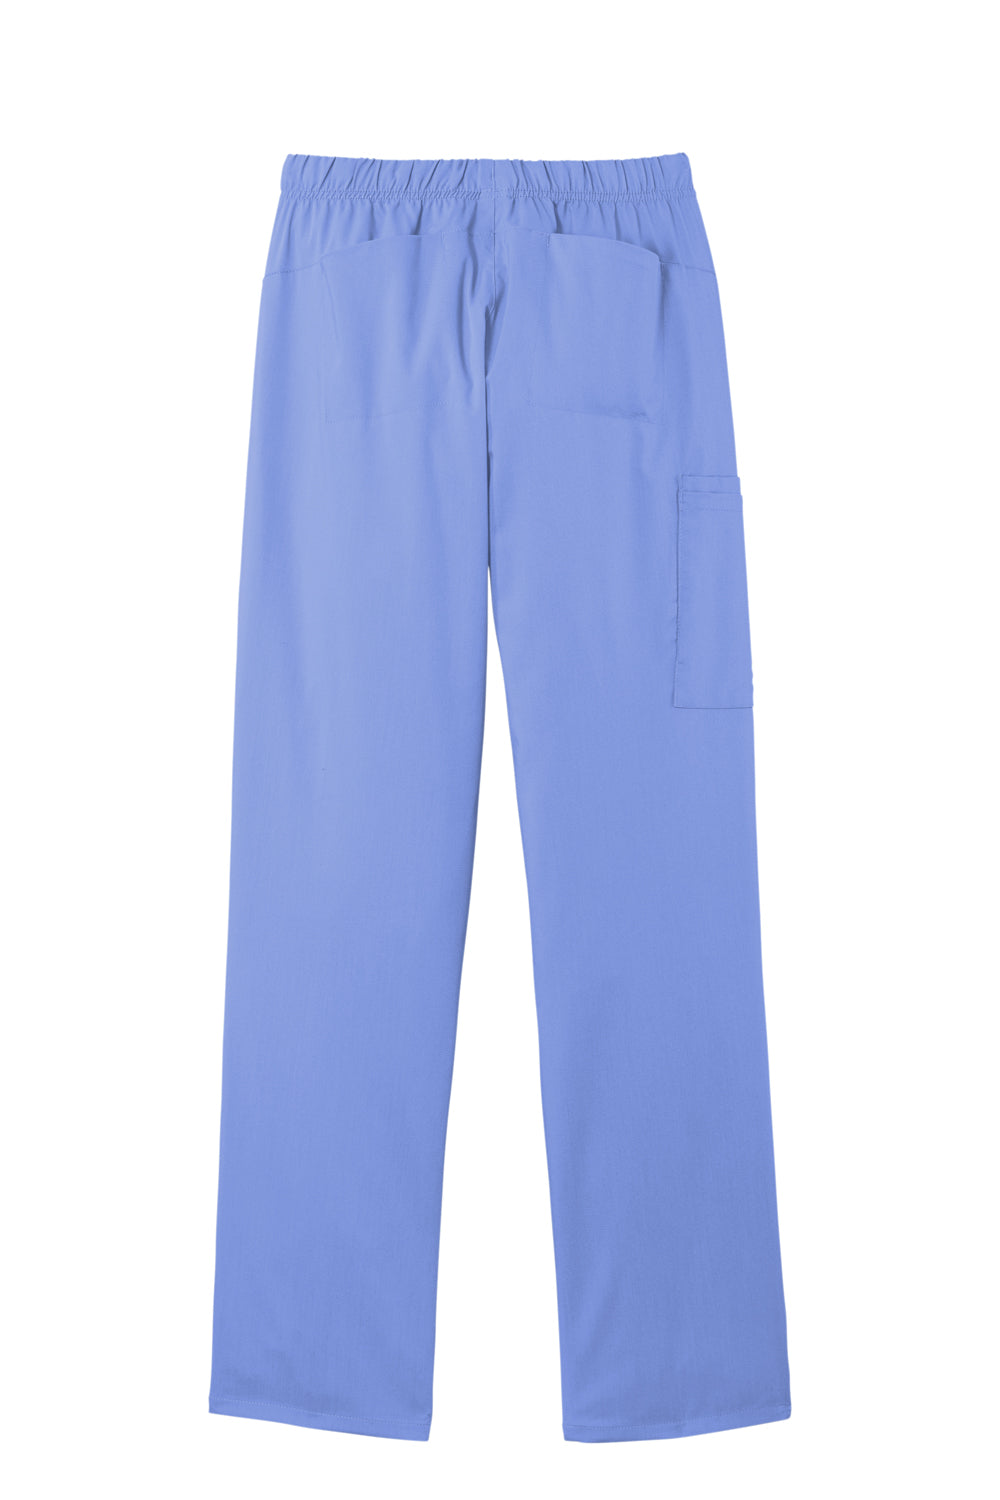 Wonderwink WW4158 Premiere Flex Cargo Pants w/ Pockets Ceil Blue Flat Back